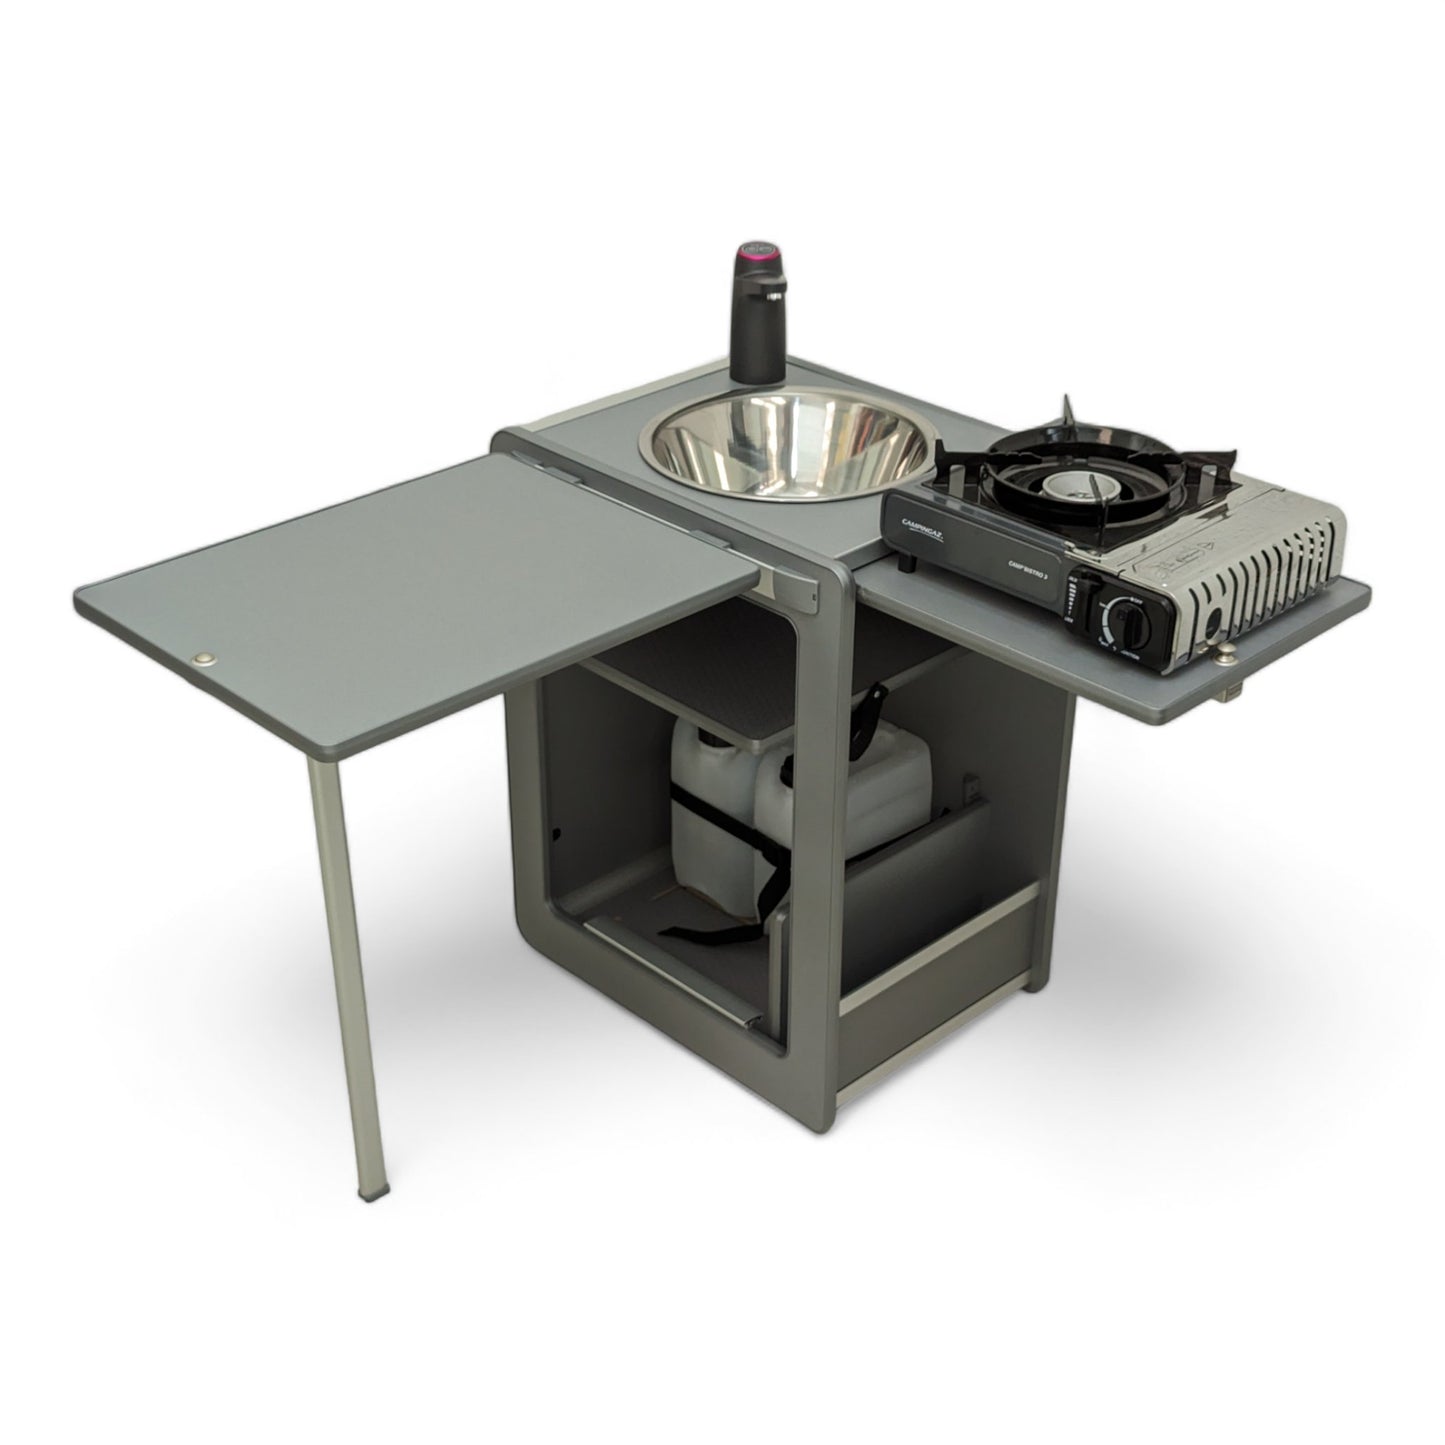 NEW Vangear Mini-Pod 2.1 Campervan Kitchen Pod-Grey - Vangear-EU